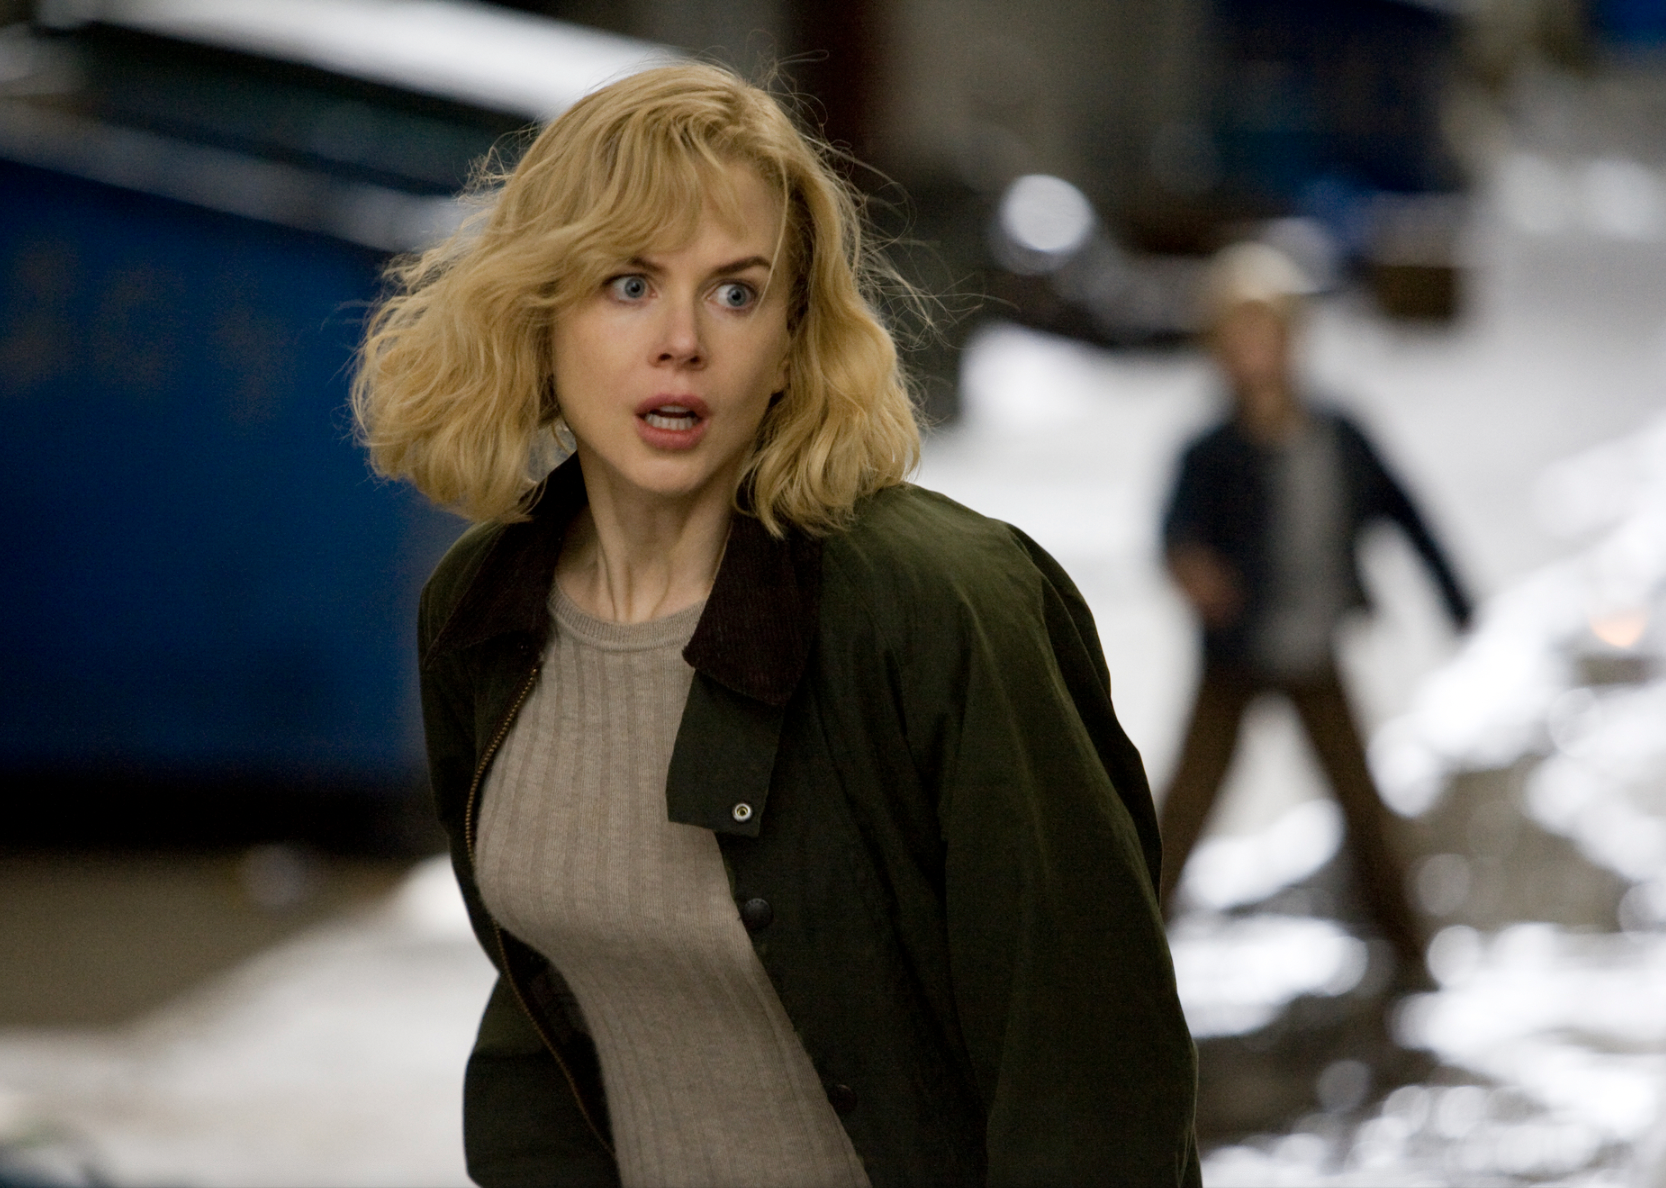 Nicole Kidman in "The Invasion"